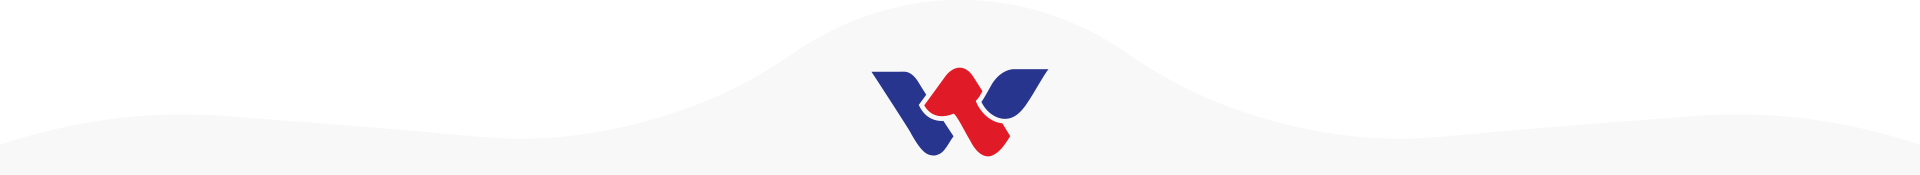 Wlaton Footer Logo